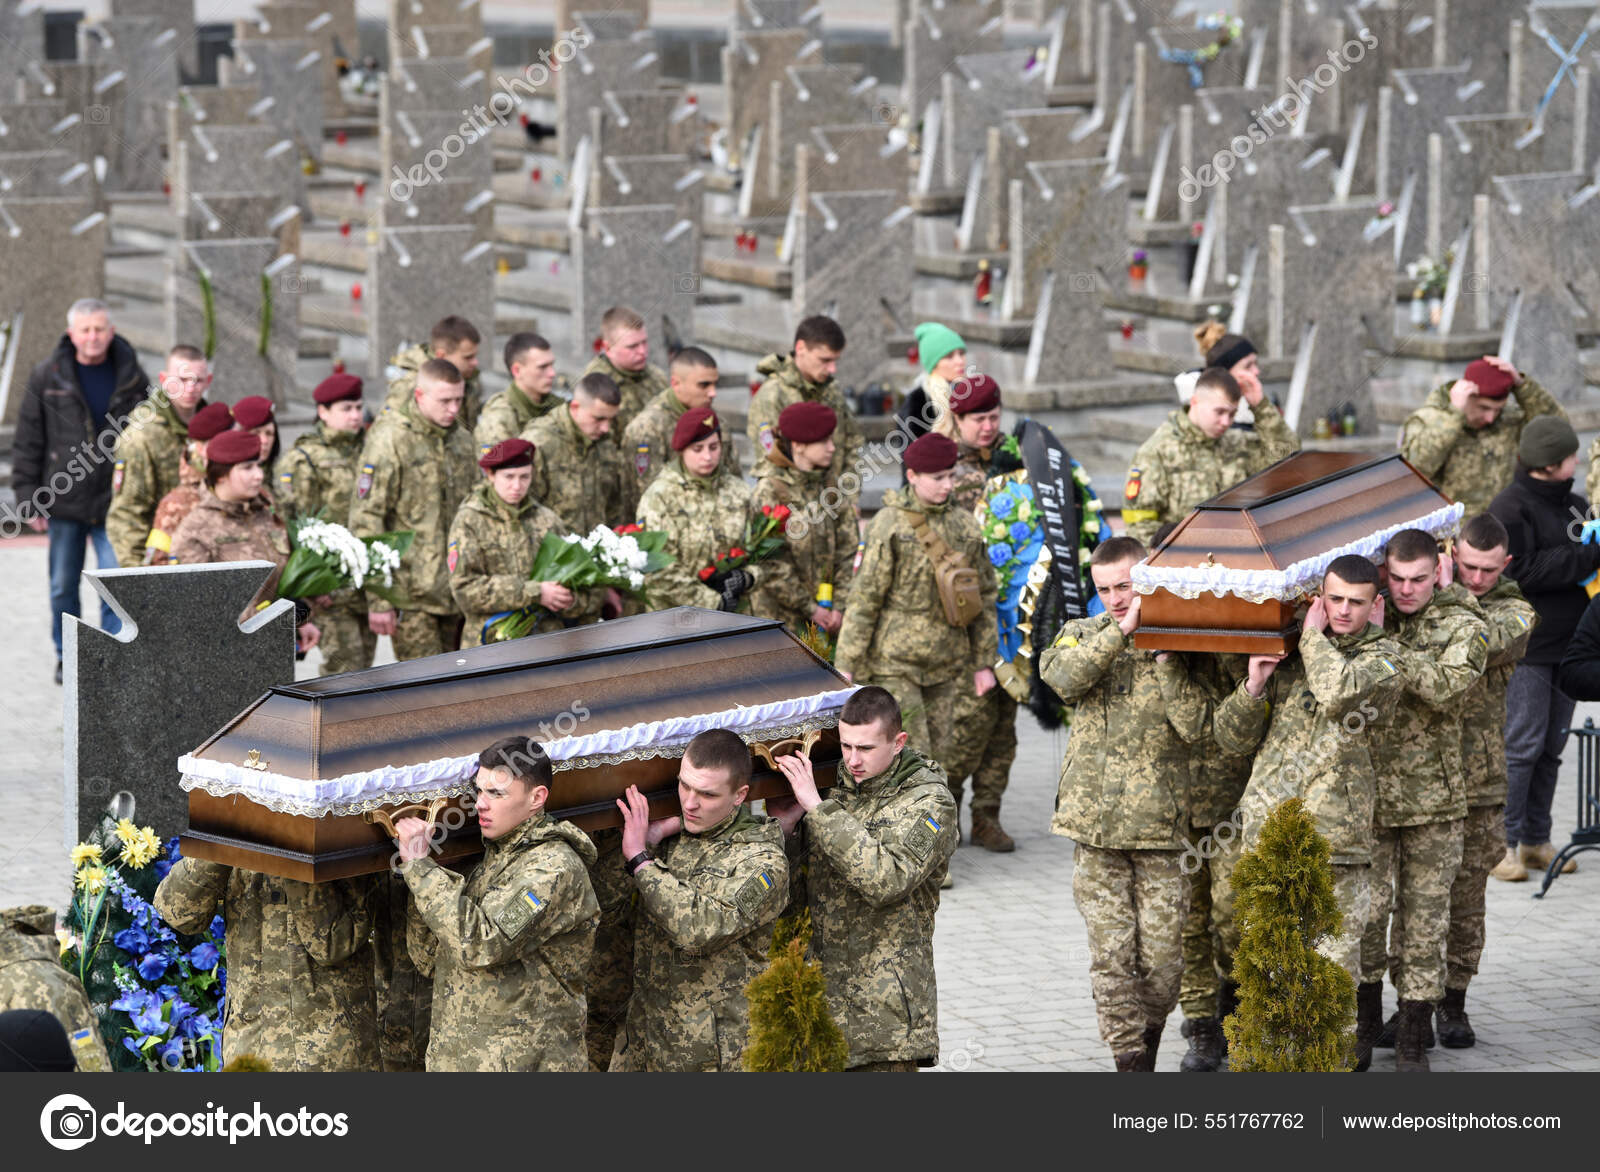 https://st.depositphotos.com/11394376/55176/i/1600/depositphotos_551767762-free-stock-photo-lviv-ukraine-march-2022-servicemen.jpg